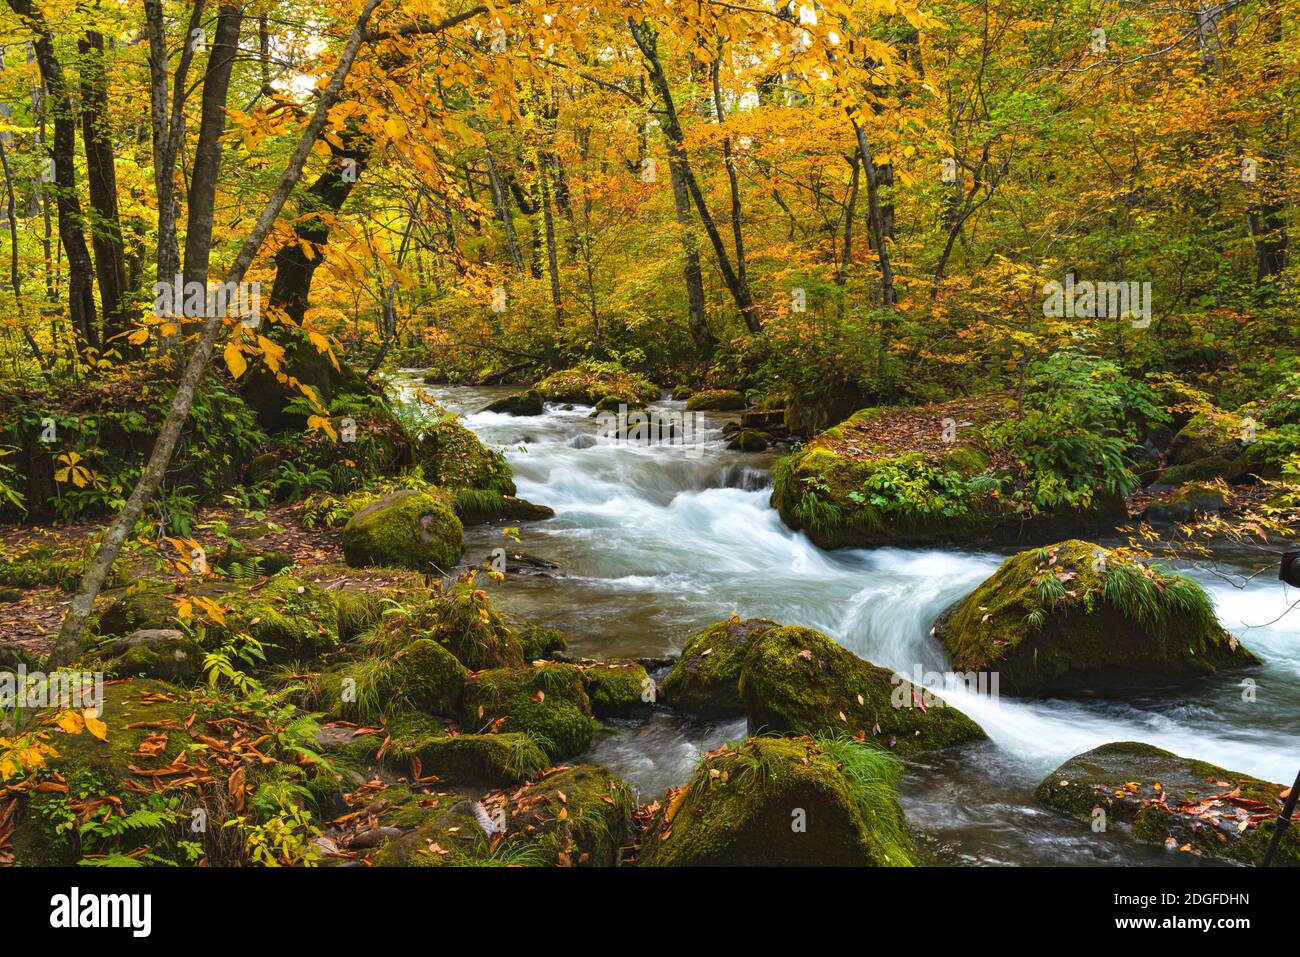 Oirase Fluss fließen vorbei an Felsen mit grünem Moos bedeckt und Bunte Blätter fallen Stockfoto